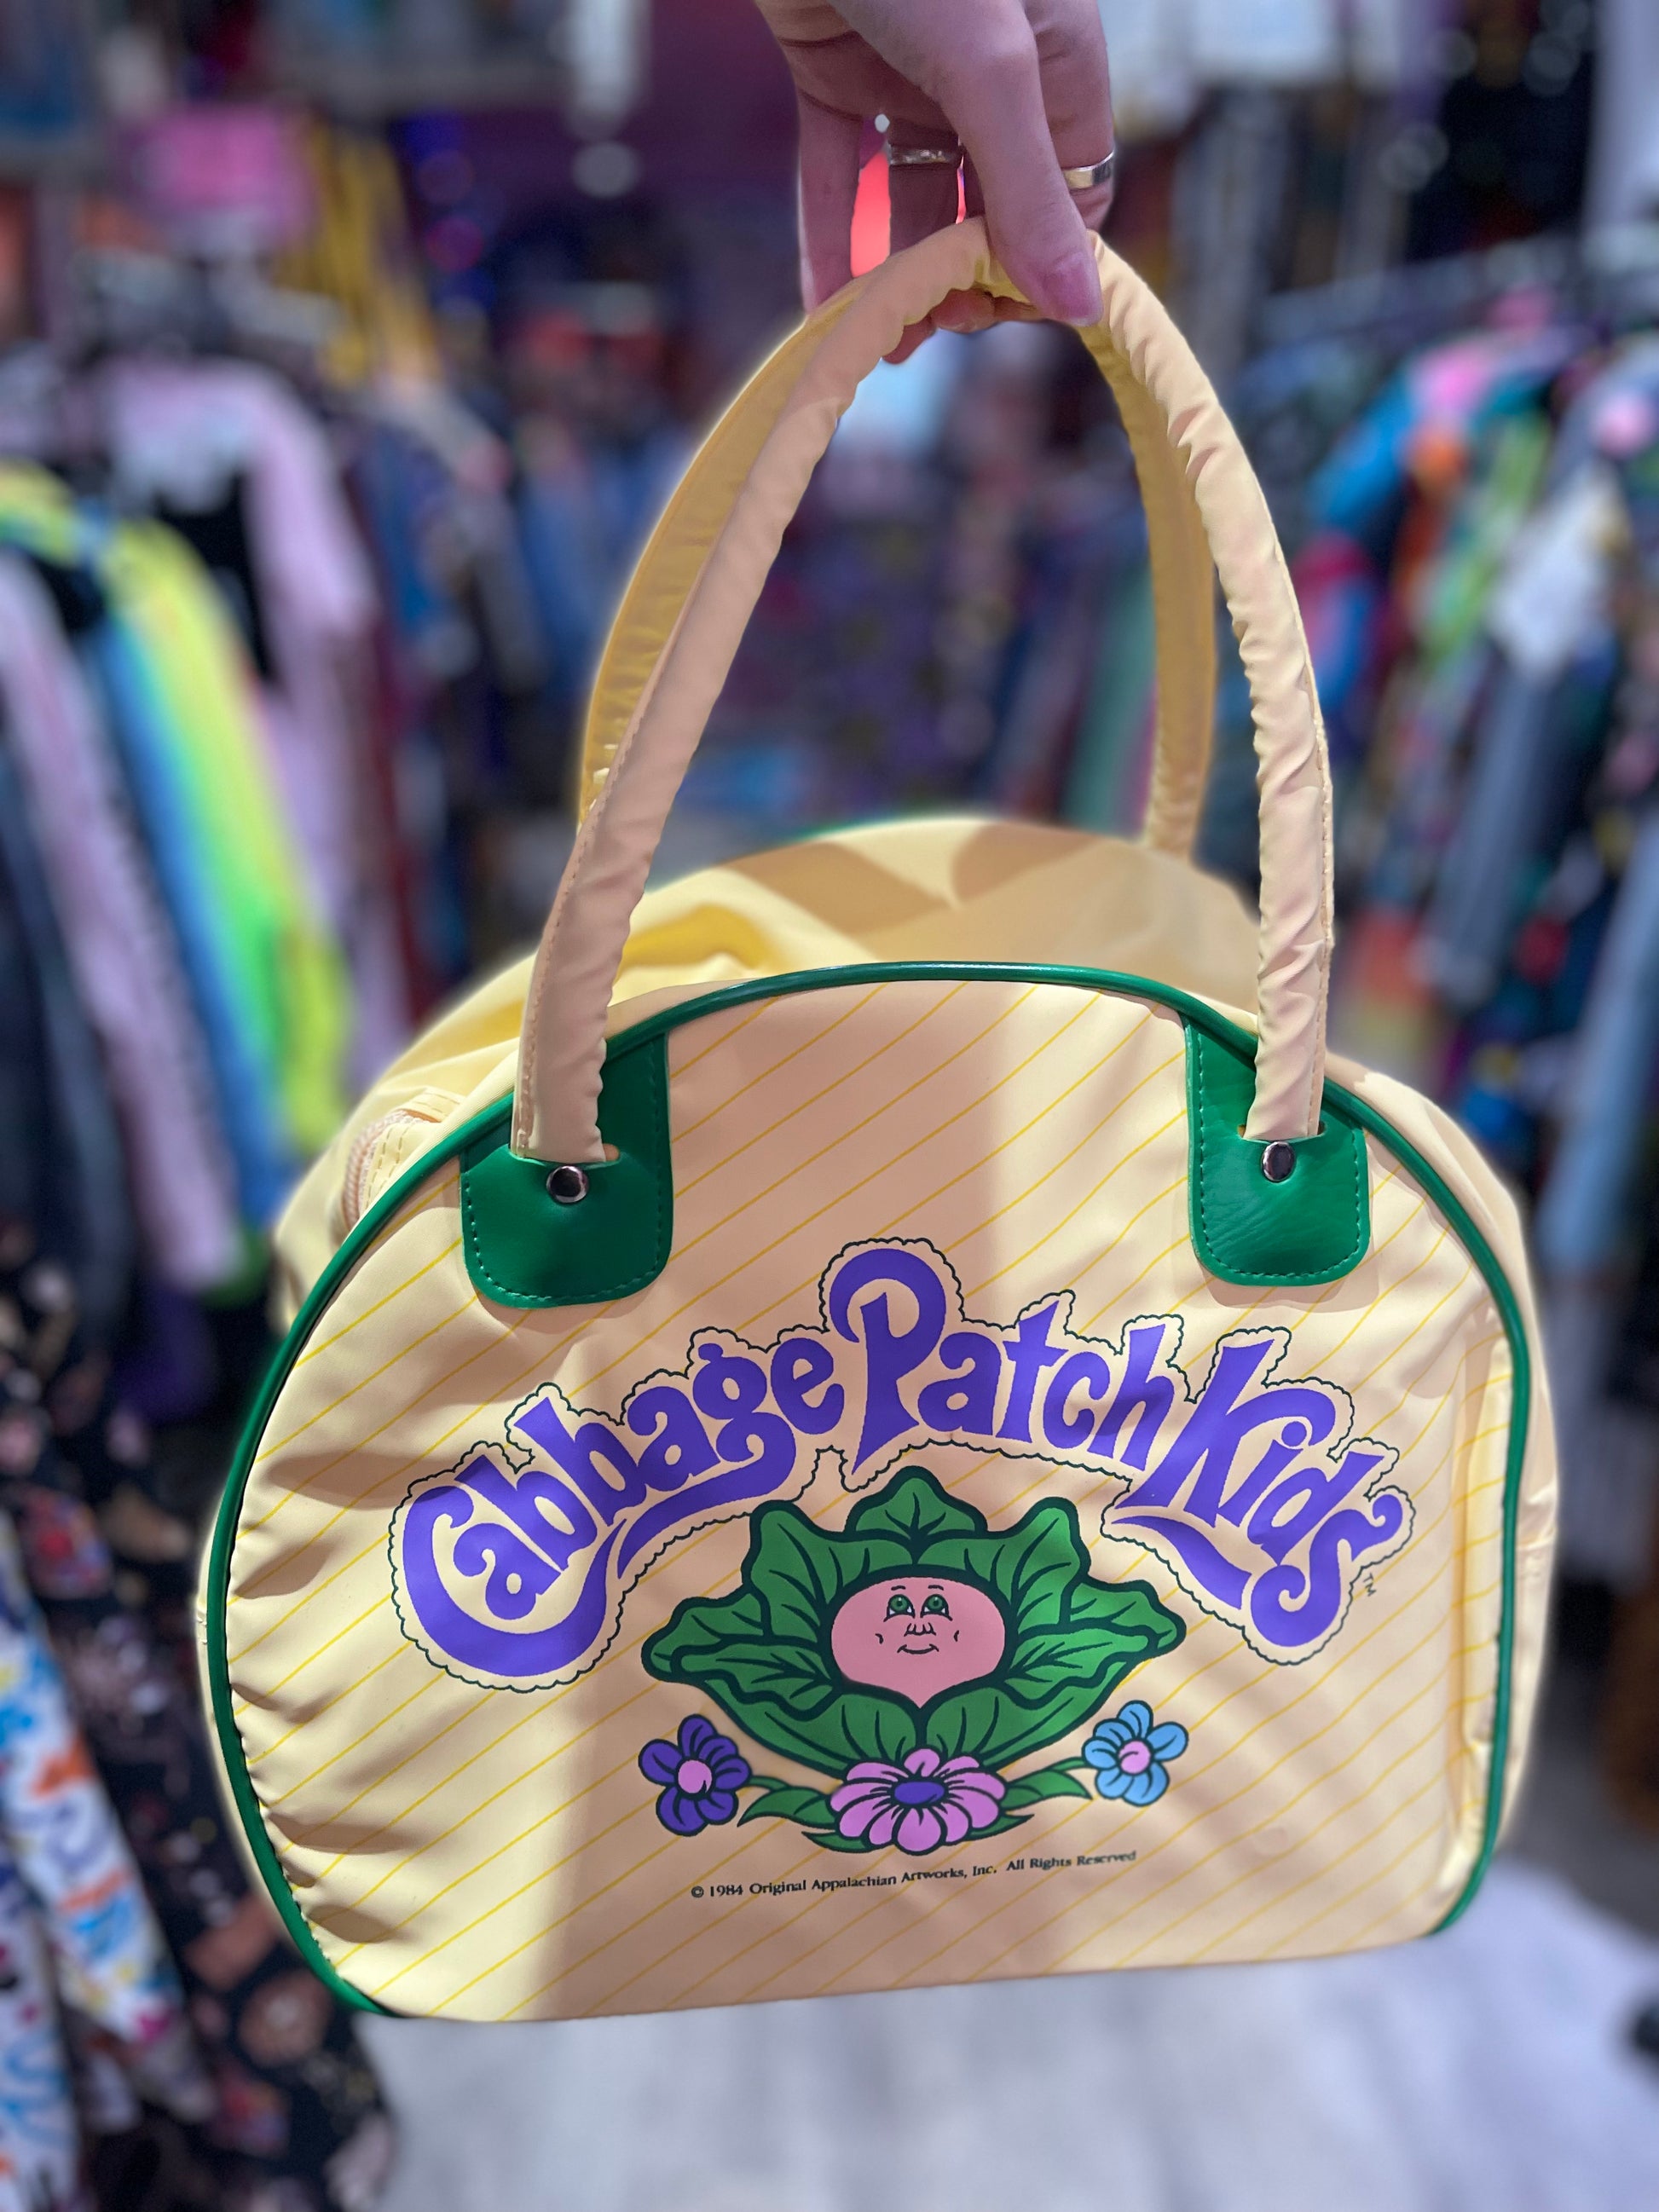 Vintage 1984 Cabbage Patch Kids Bag - Spark Pretty